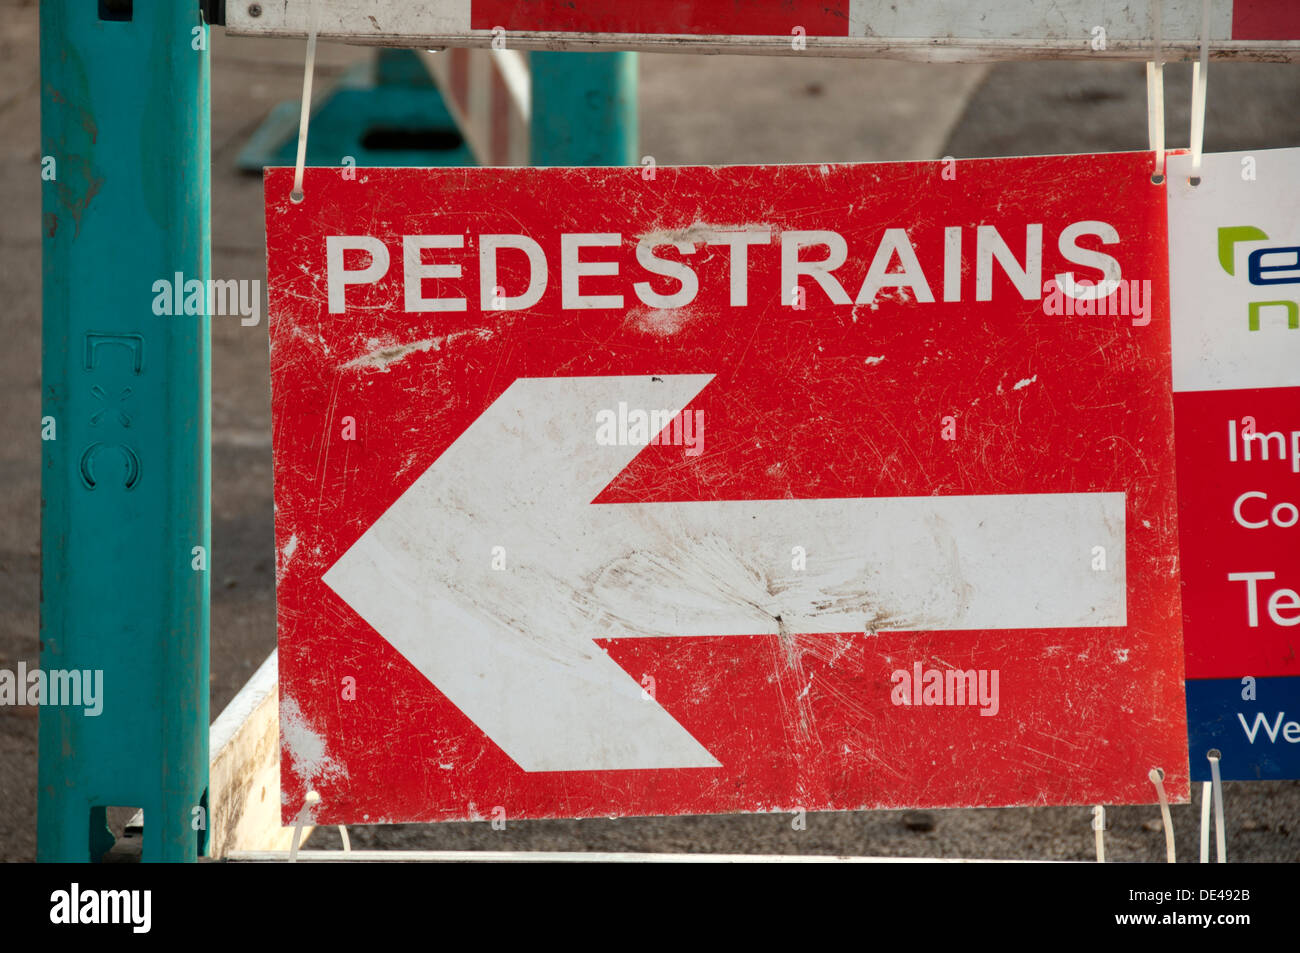 Incorrect spelling on a direction sign for pedestrians, spelt 'pedestrains'.  Droylsden, Manchester, England, UK Stock Photo